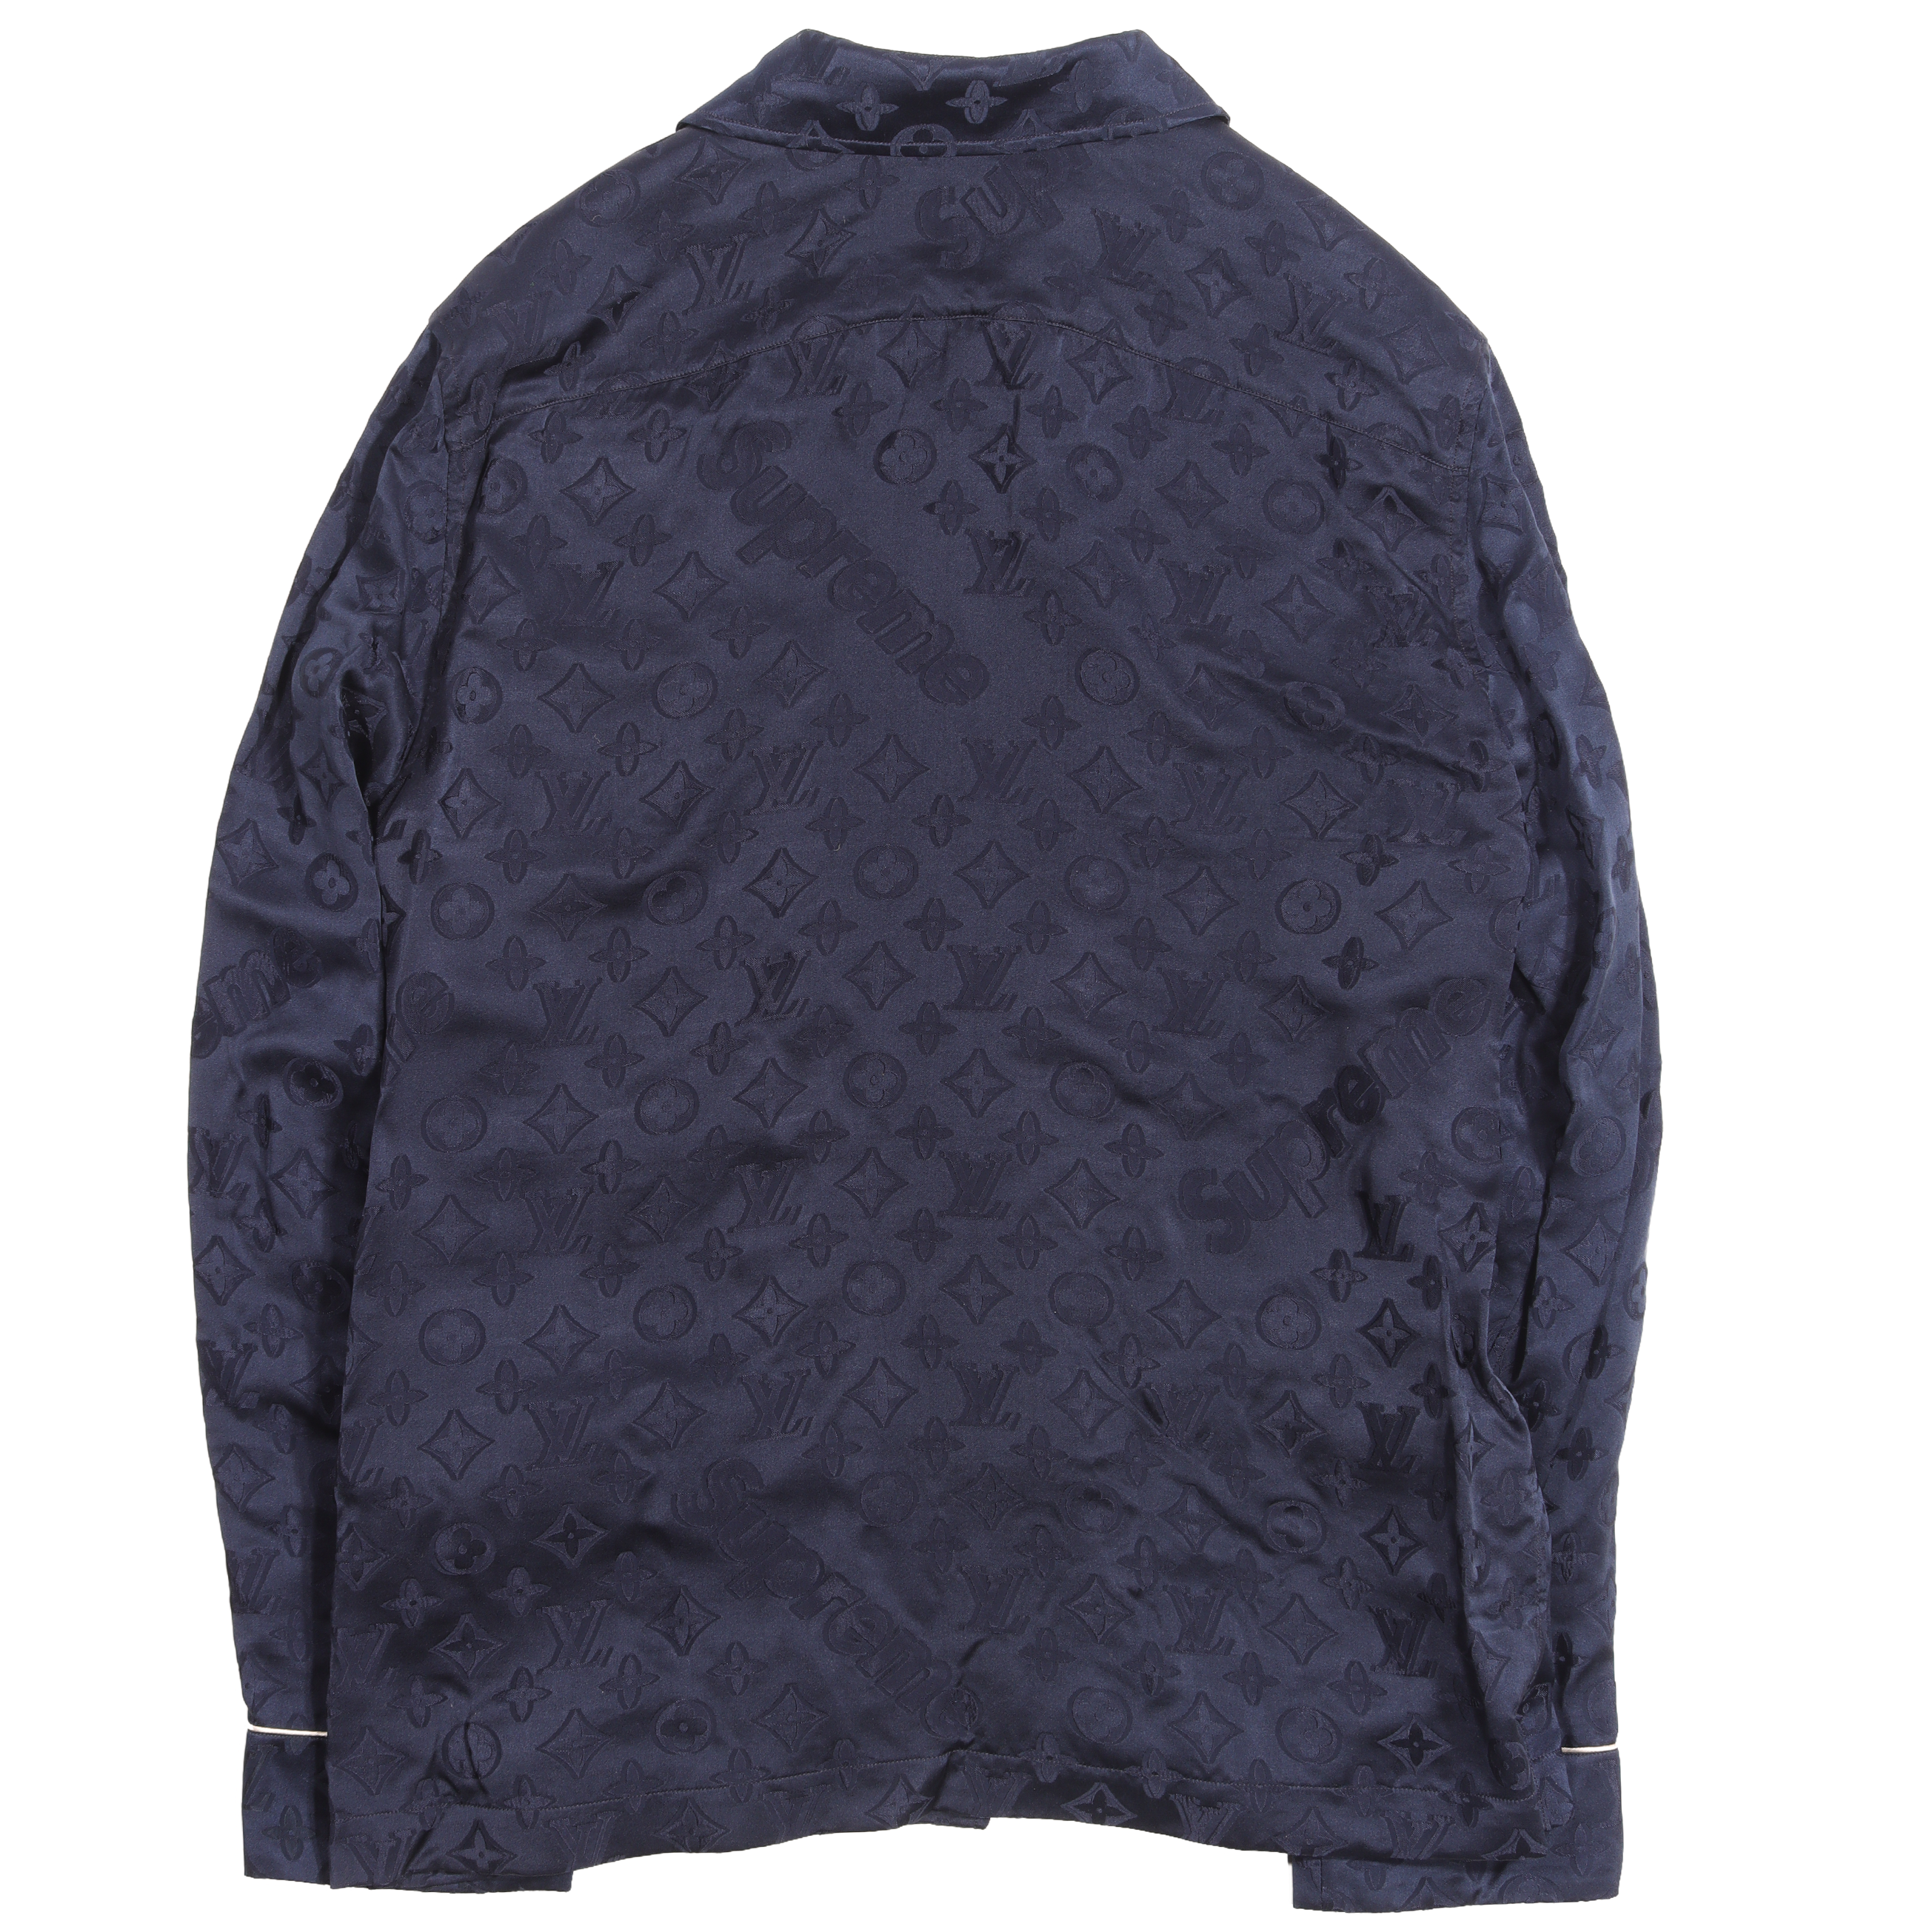 Supreme Jacquard Silk Pajama Shirt Blue